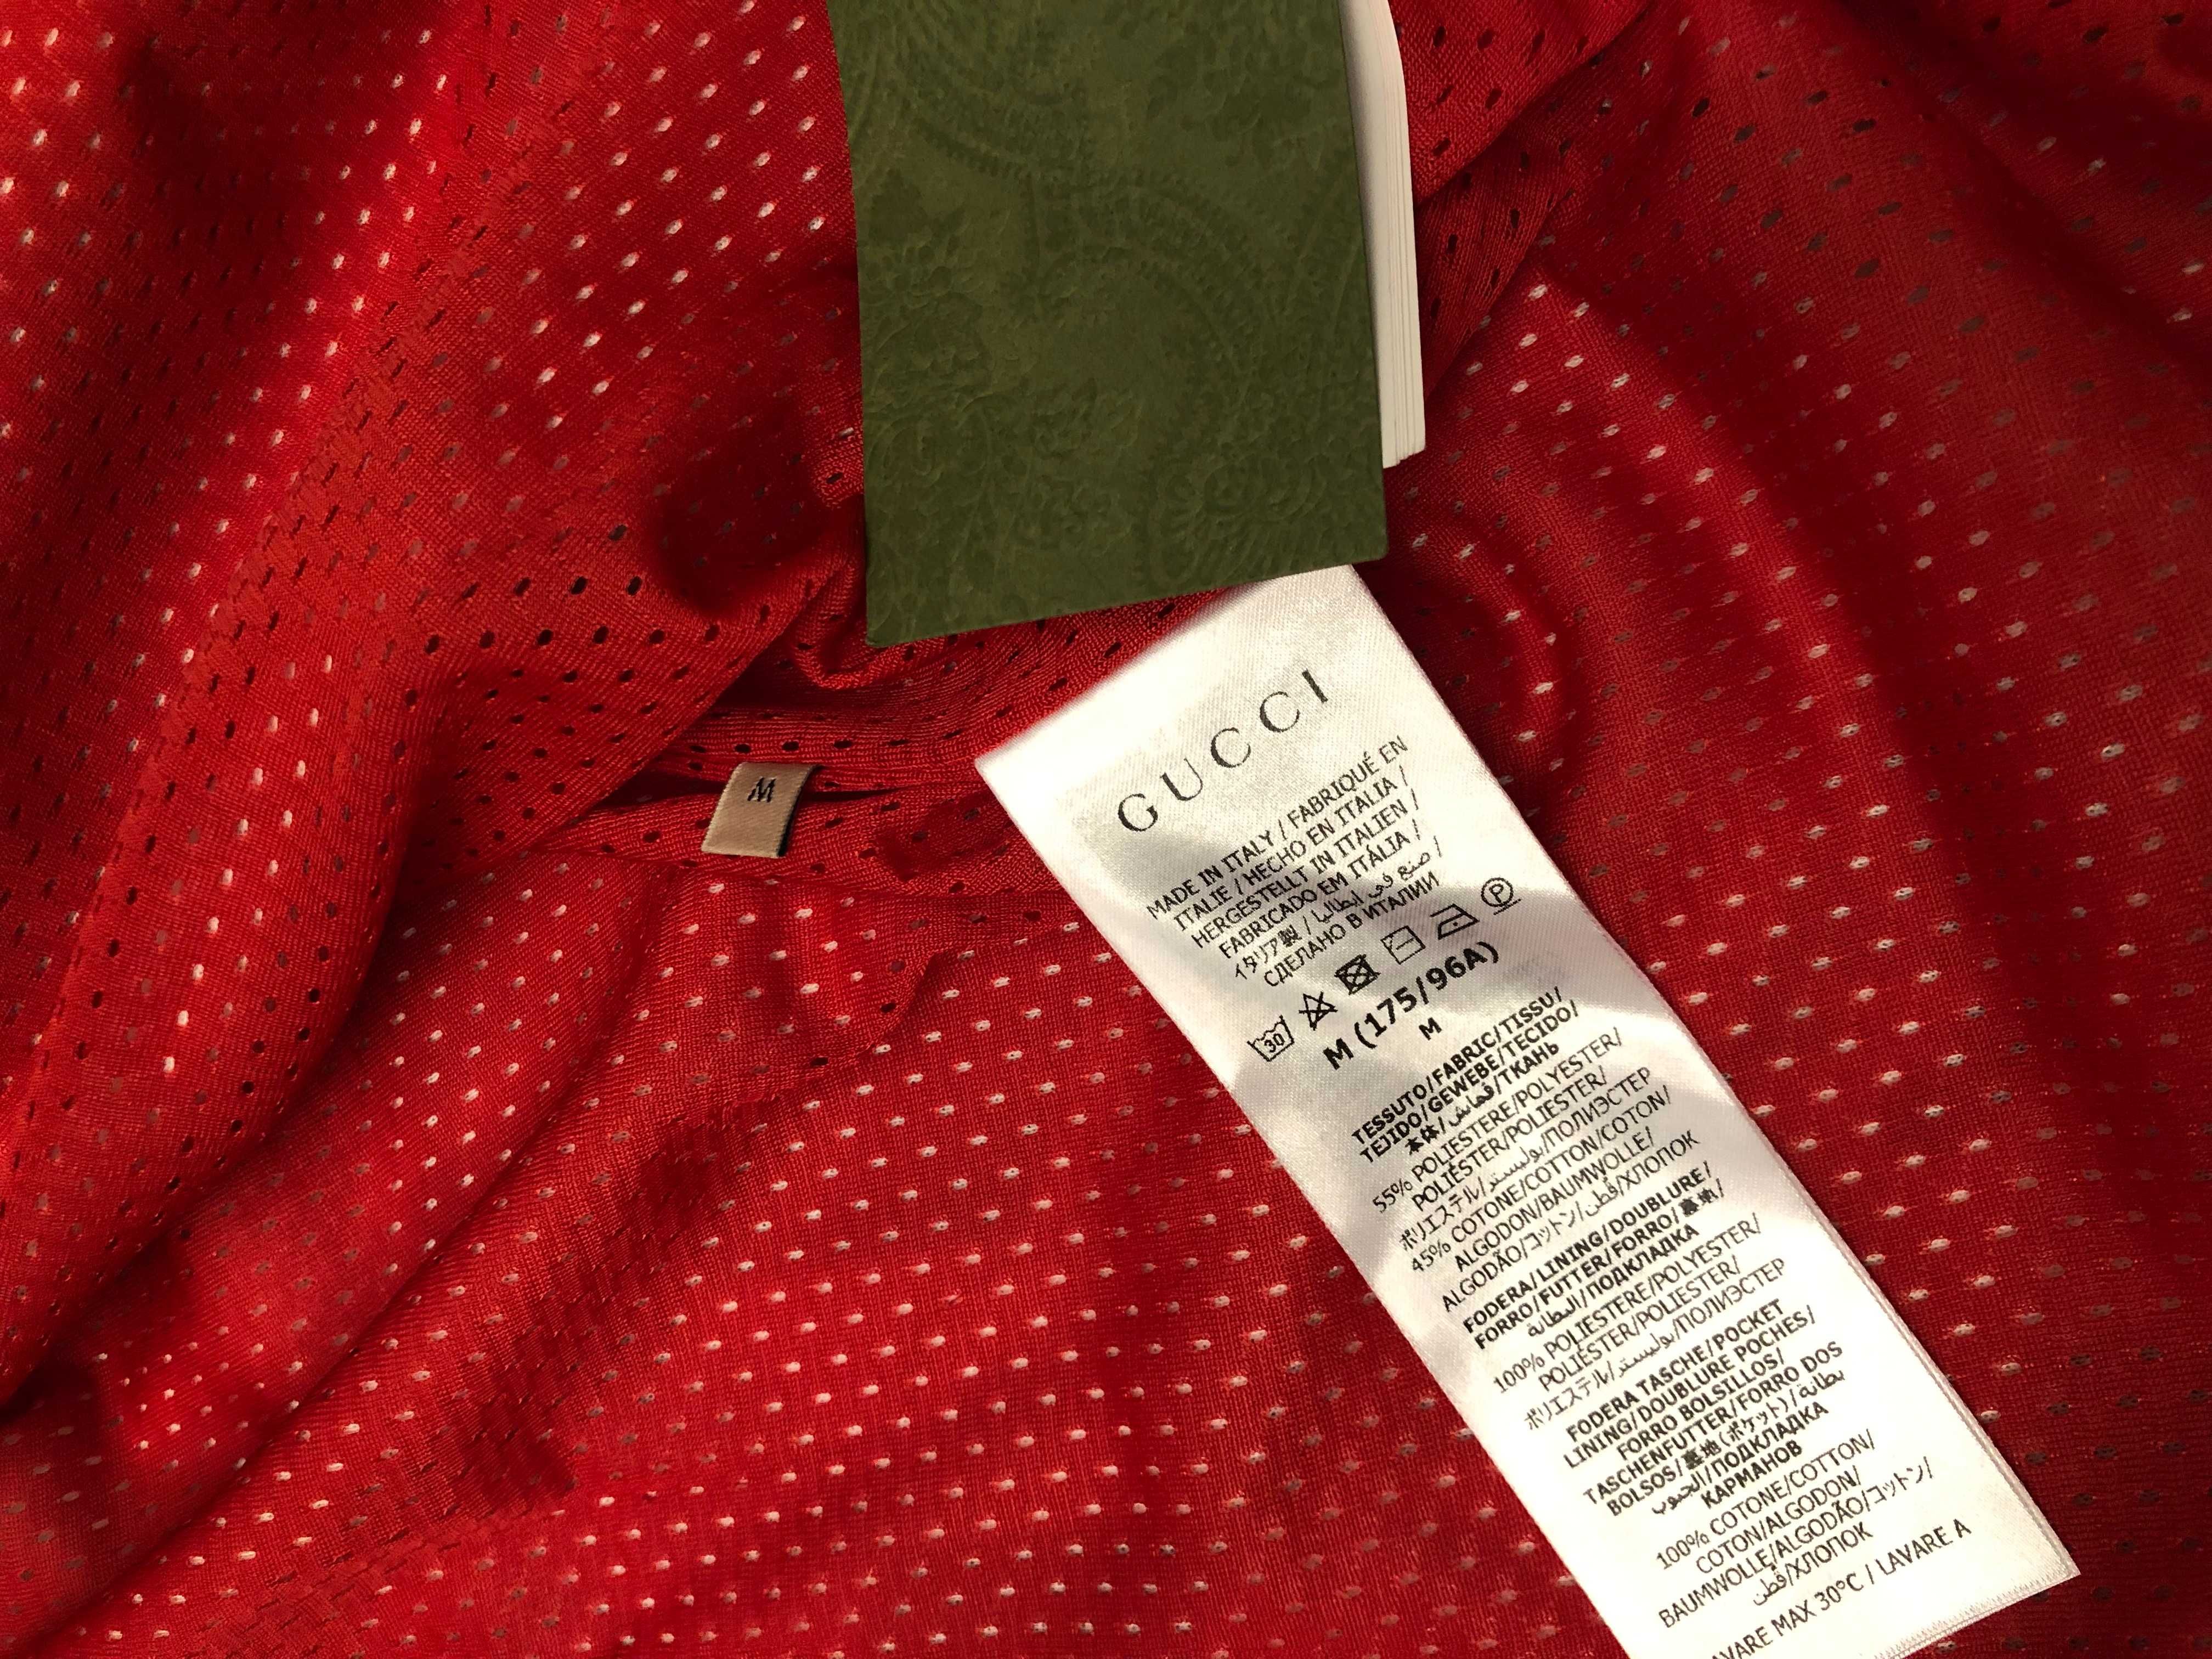 Gucci geaca fas, M-L oversize, originala, retail 1500 euro